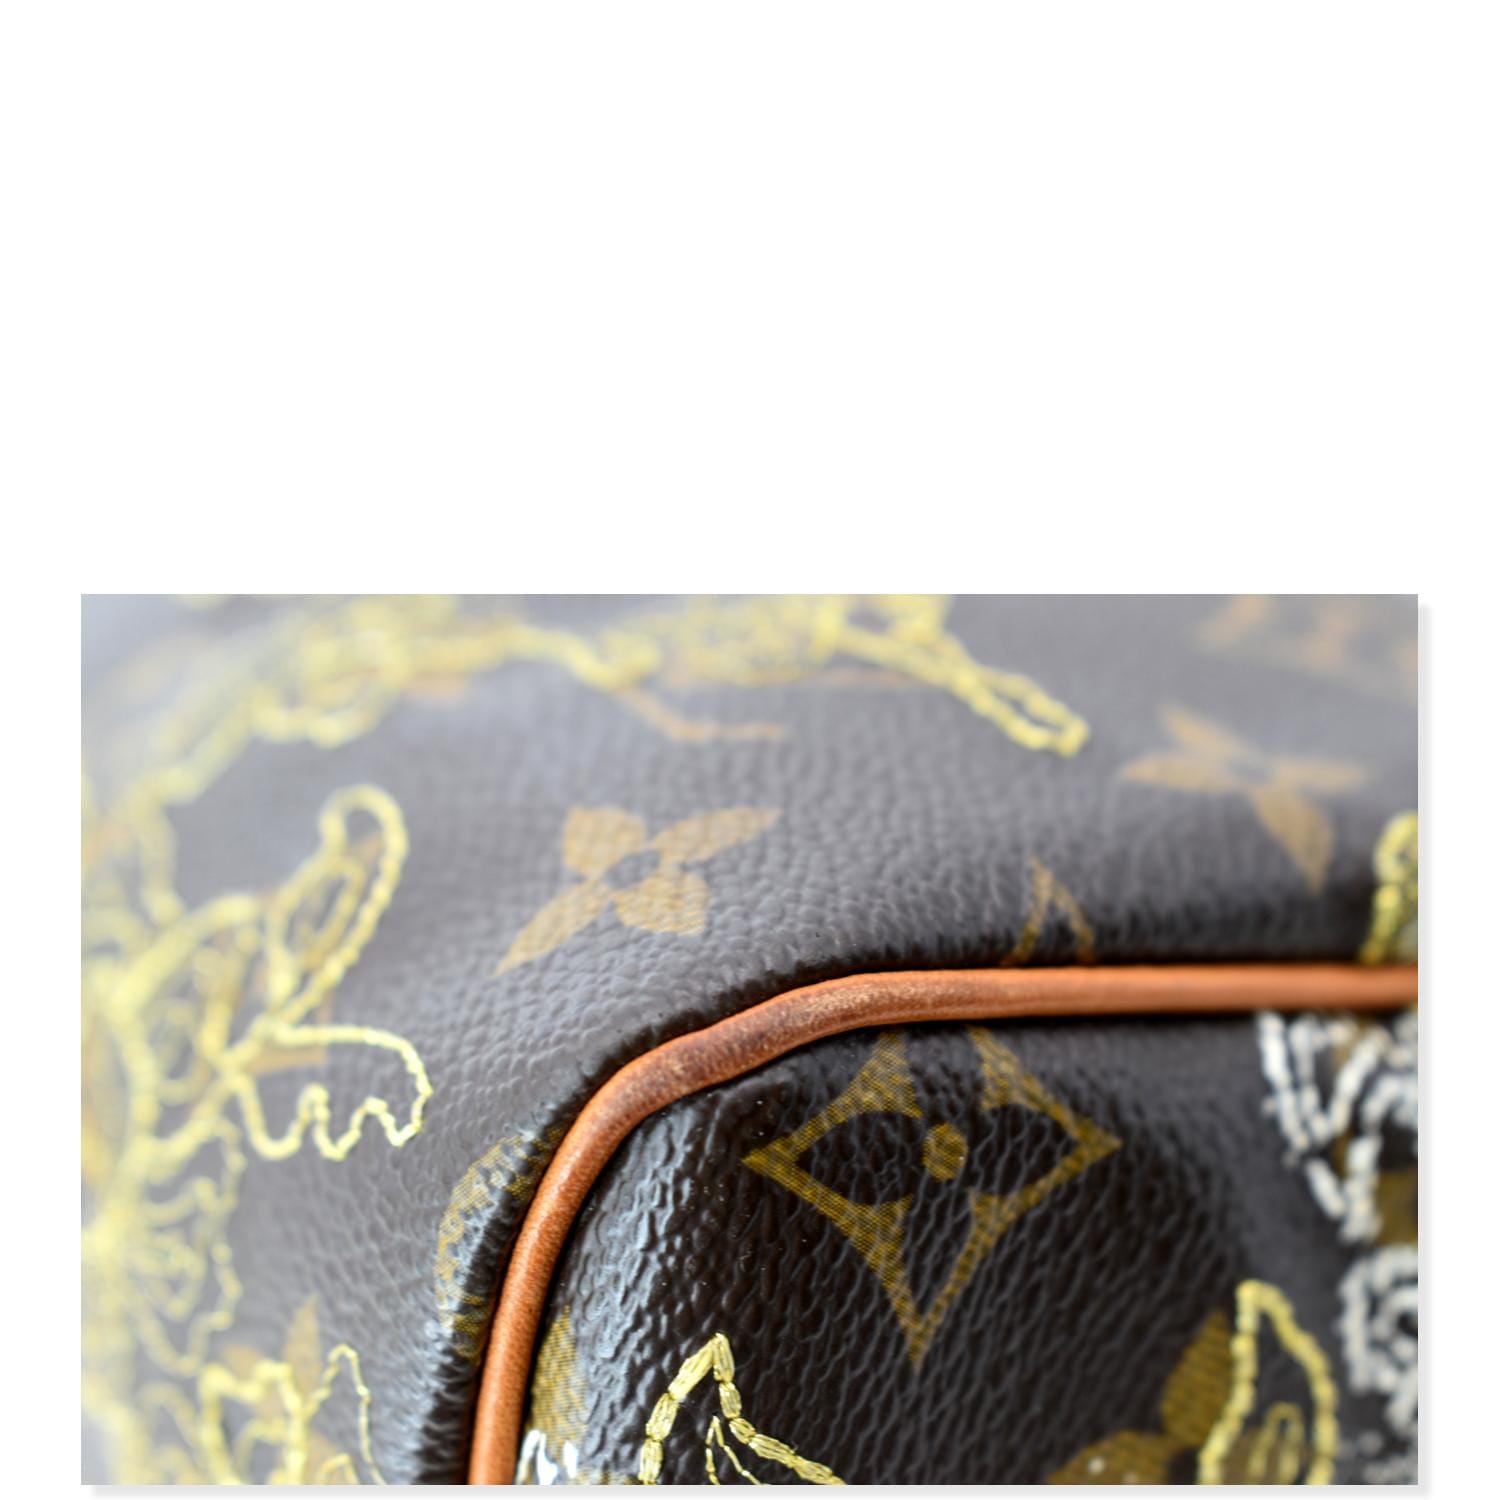 Louis Vuitton dentelle Speedy 30 Monogram Canvas Satchel Bag Brown